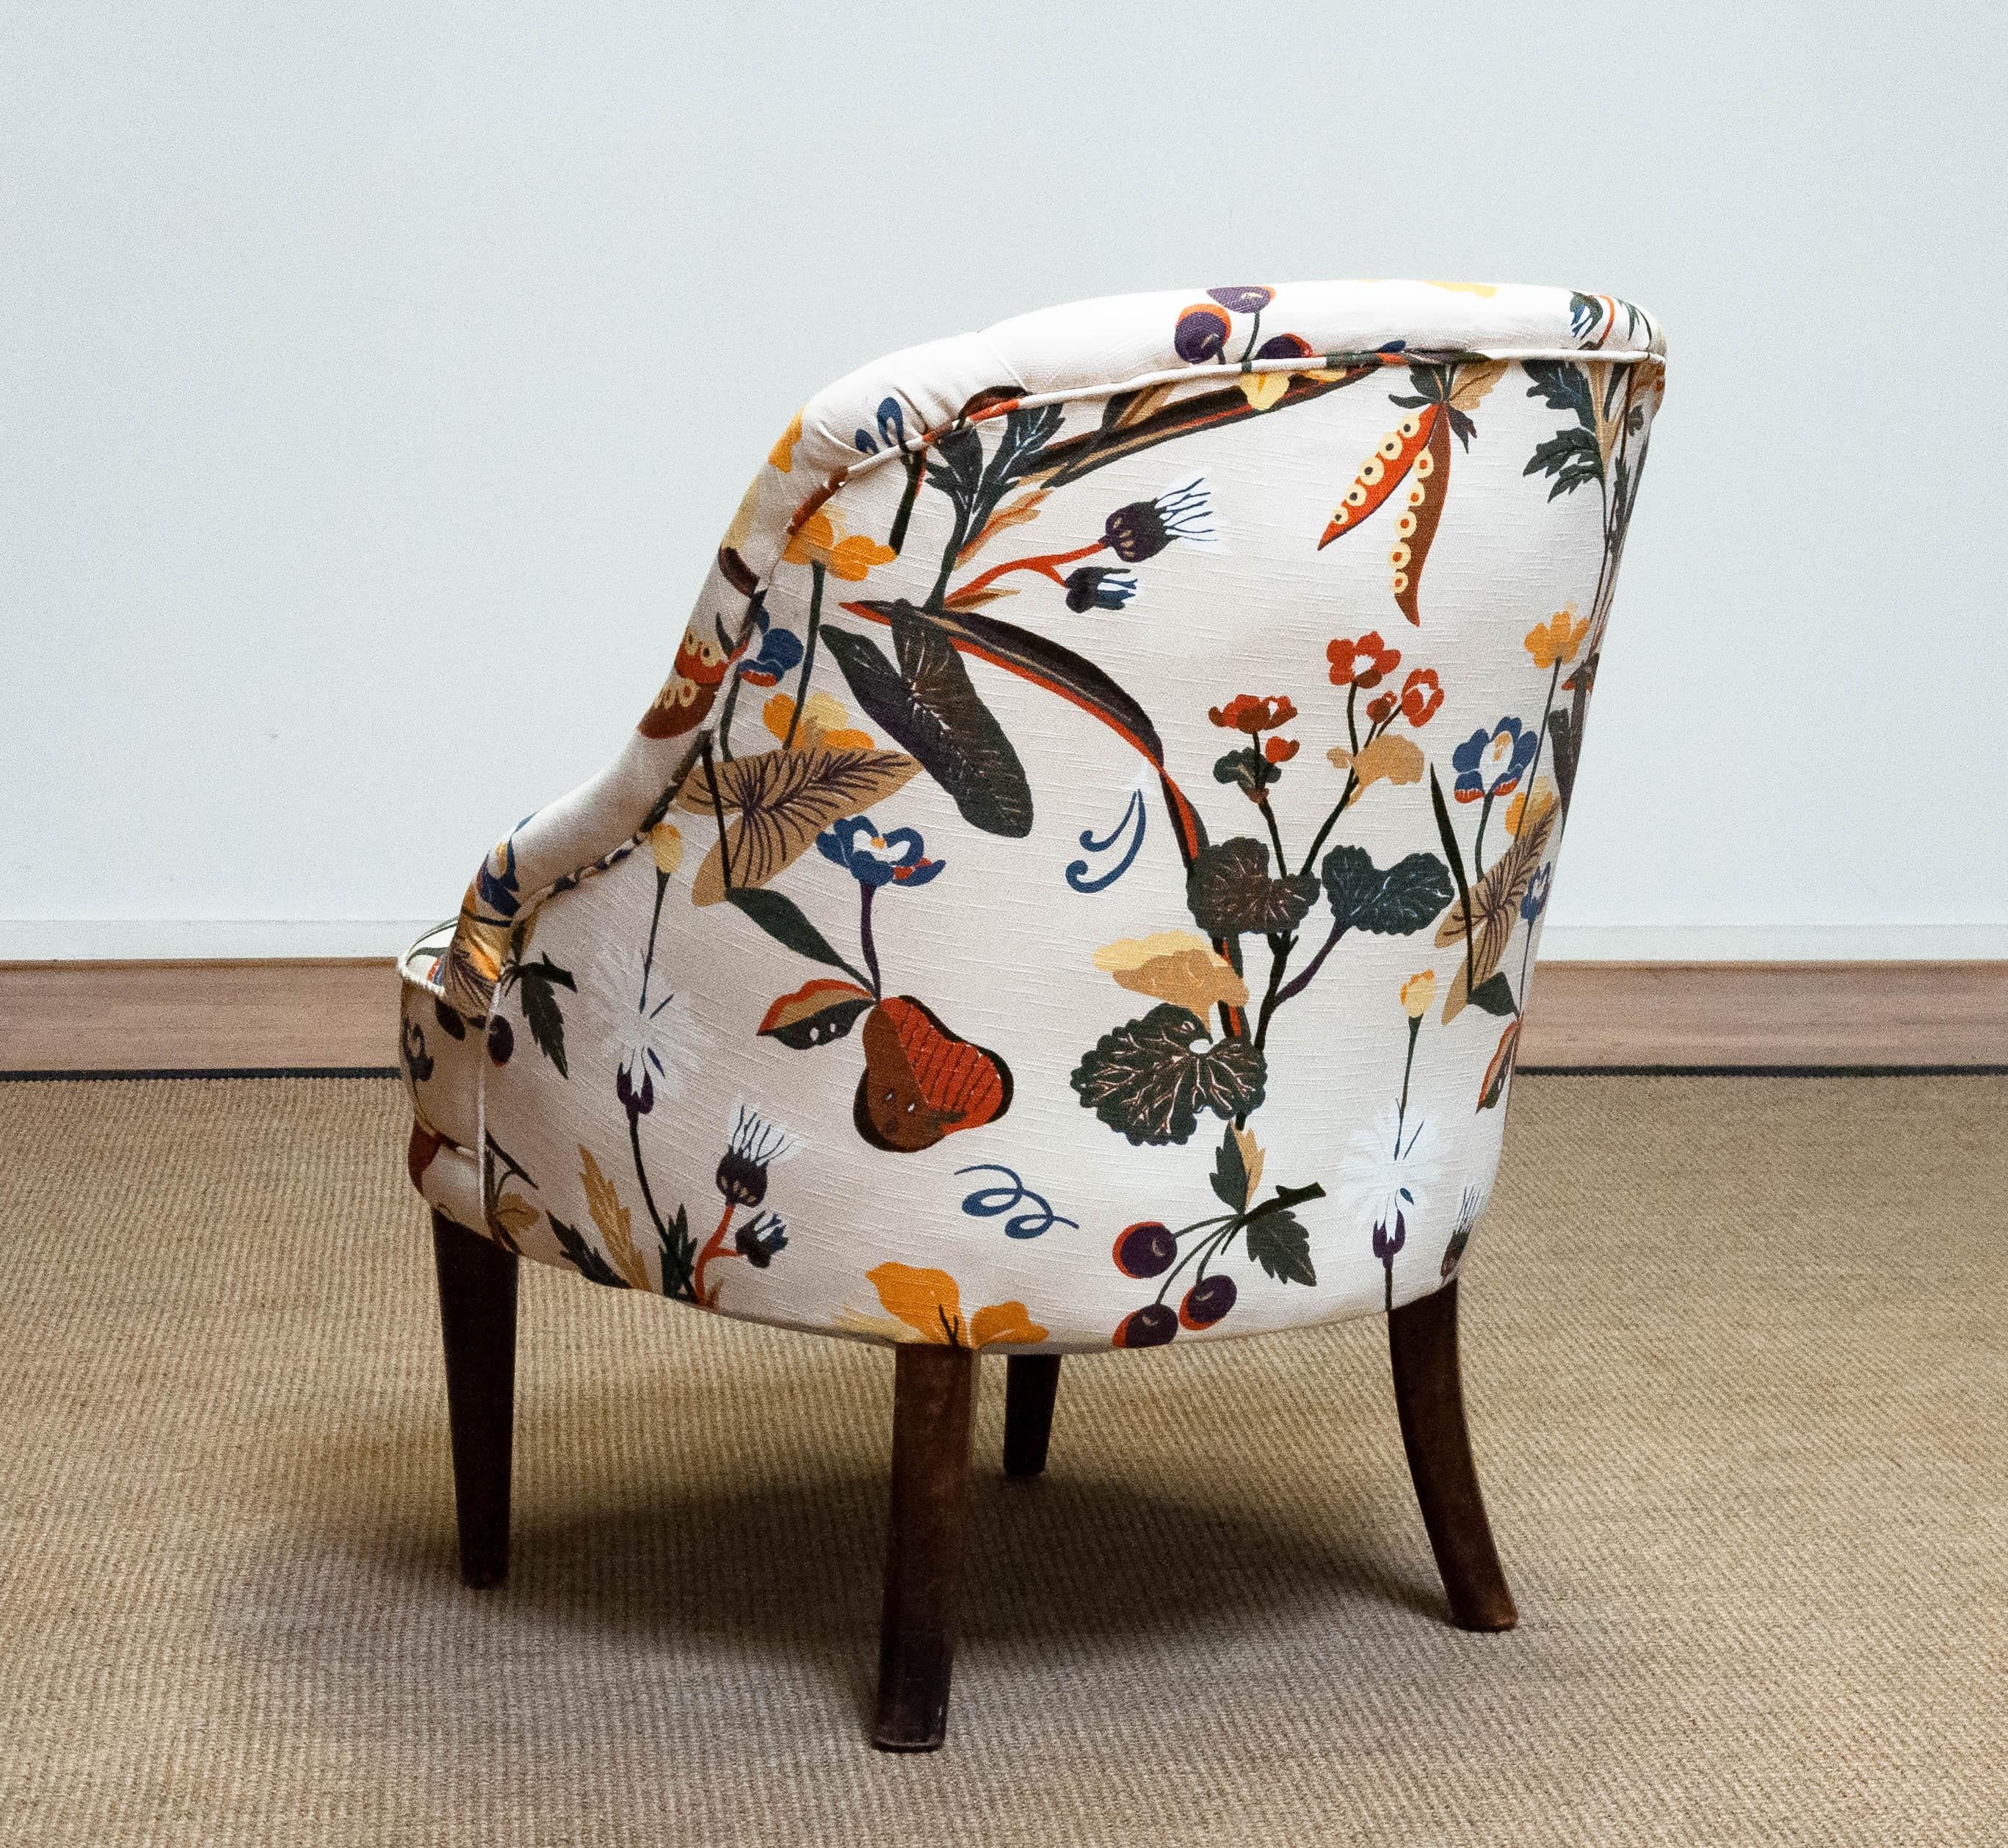 '40s Floral Printed Linen, J. Frank Style, New Upholstered Danish Slipper Chair For Sale 1